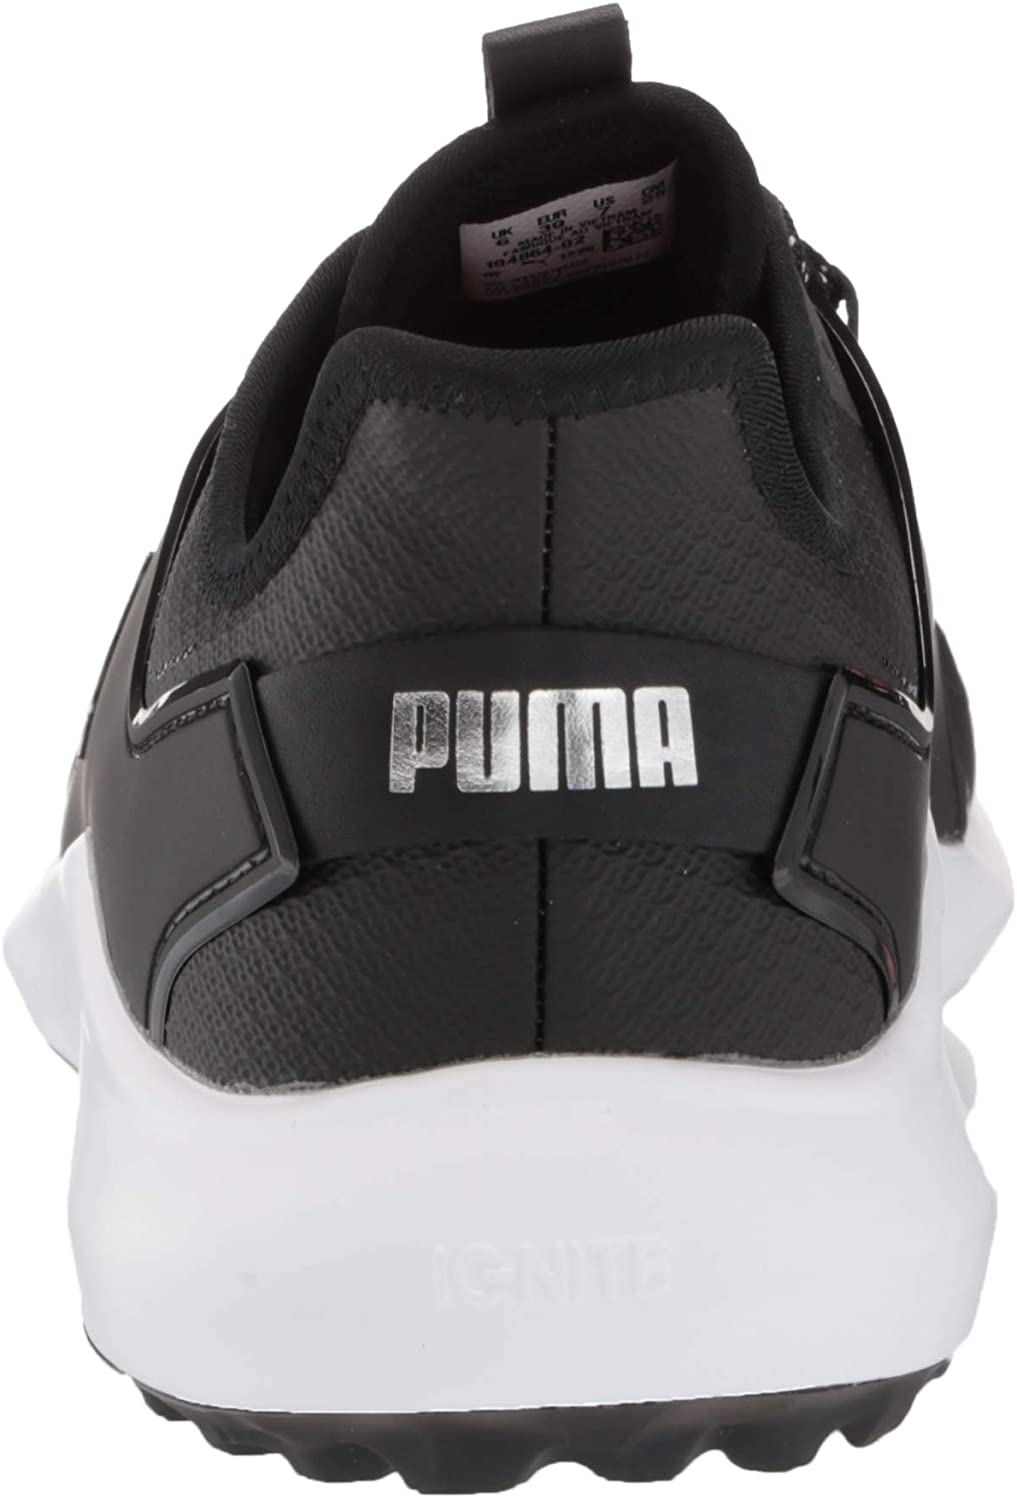 PUMA Mens Ignite Fasten8 Golf Shoe 12 Puma Black-puma Silver-puma White - image 3 of 8